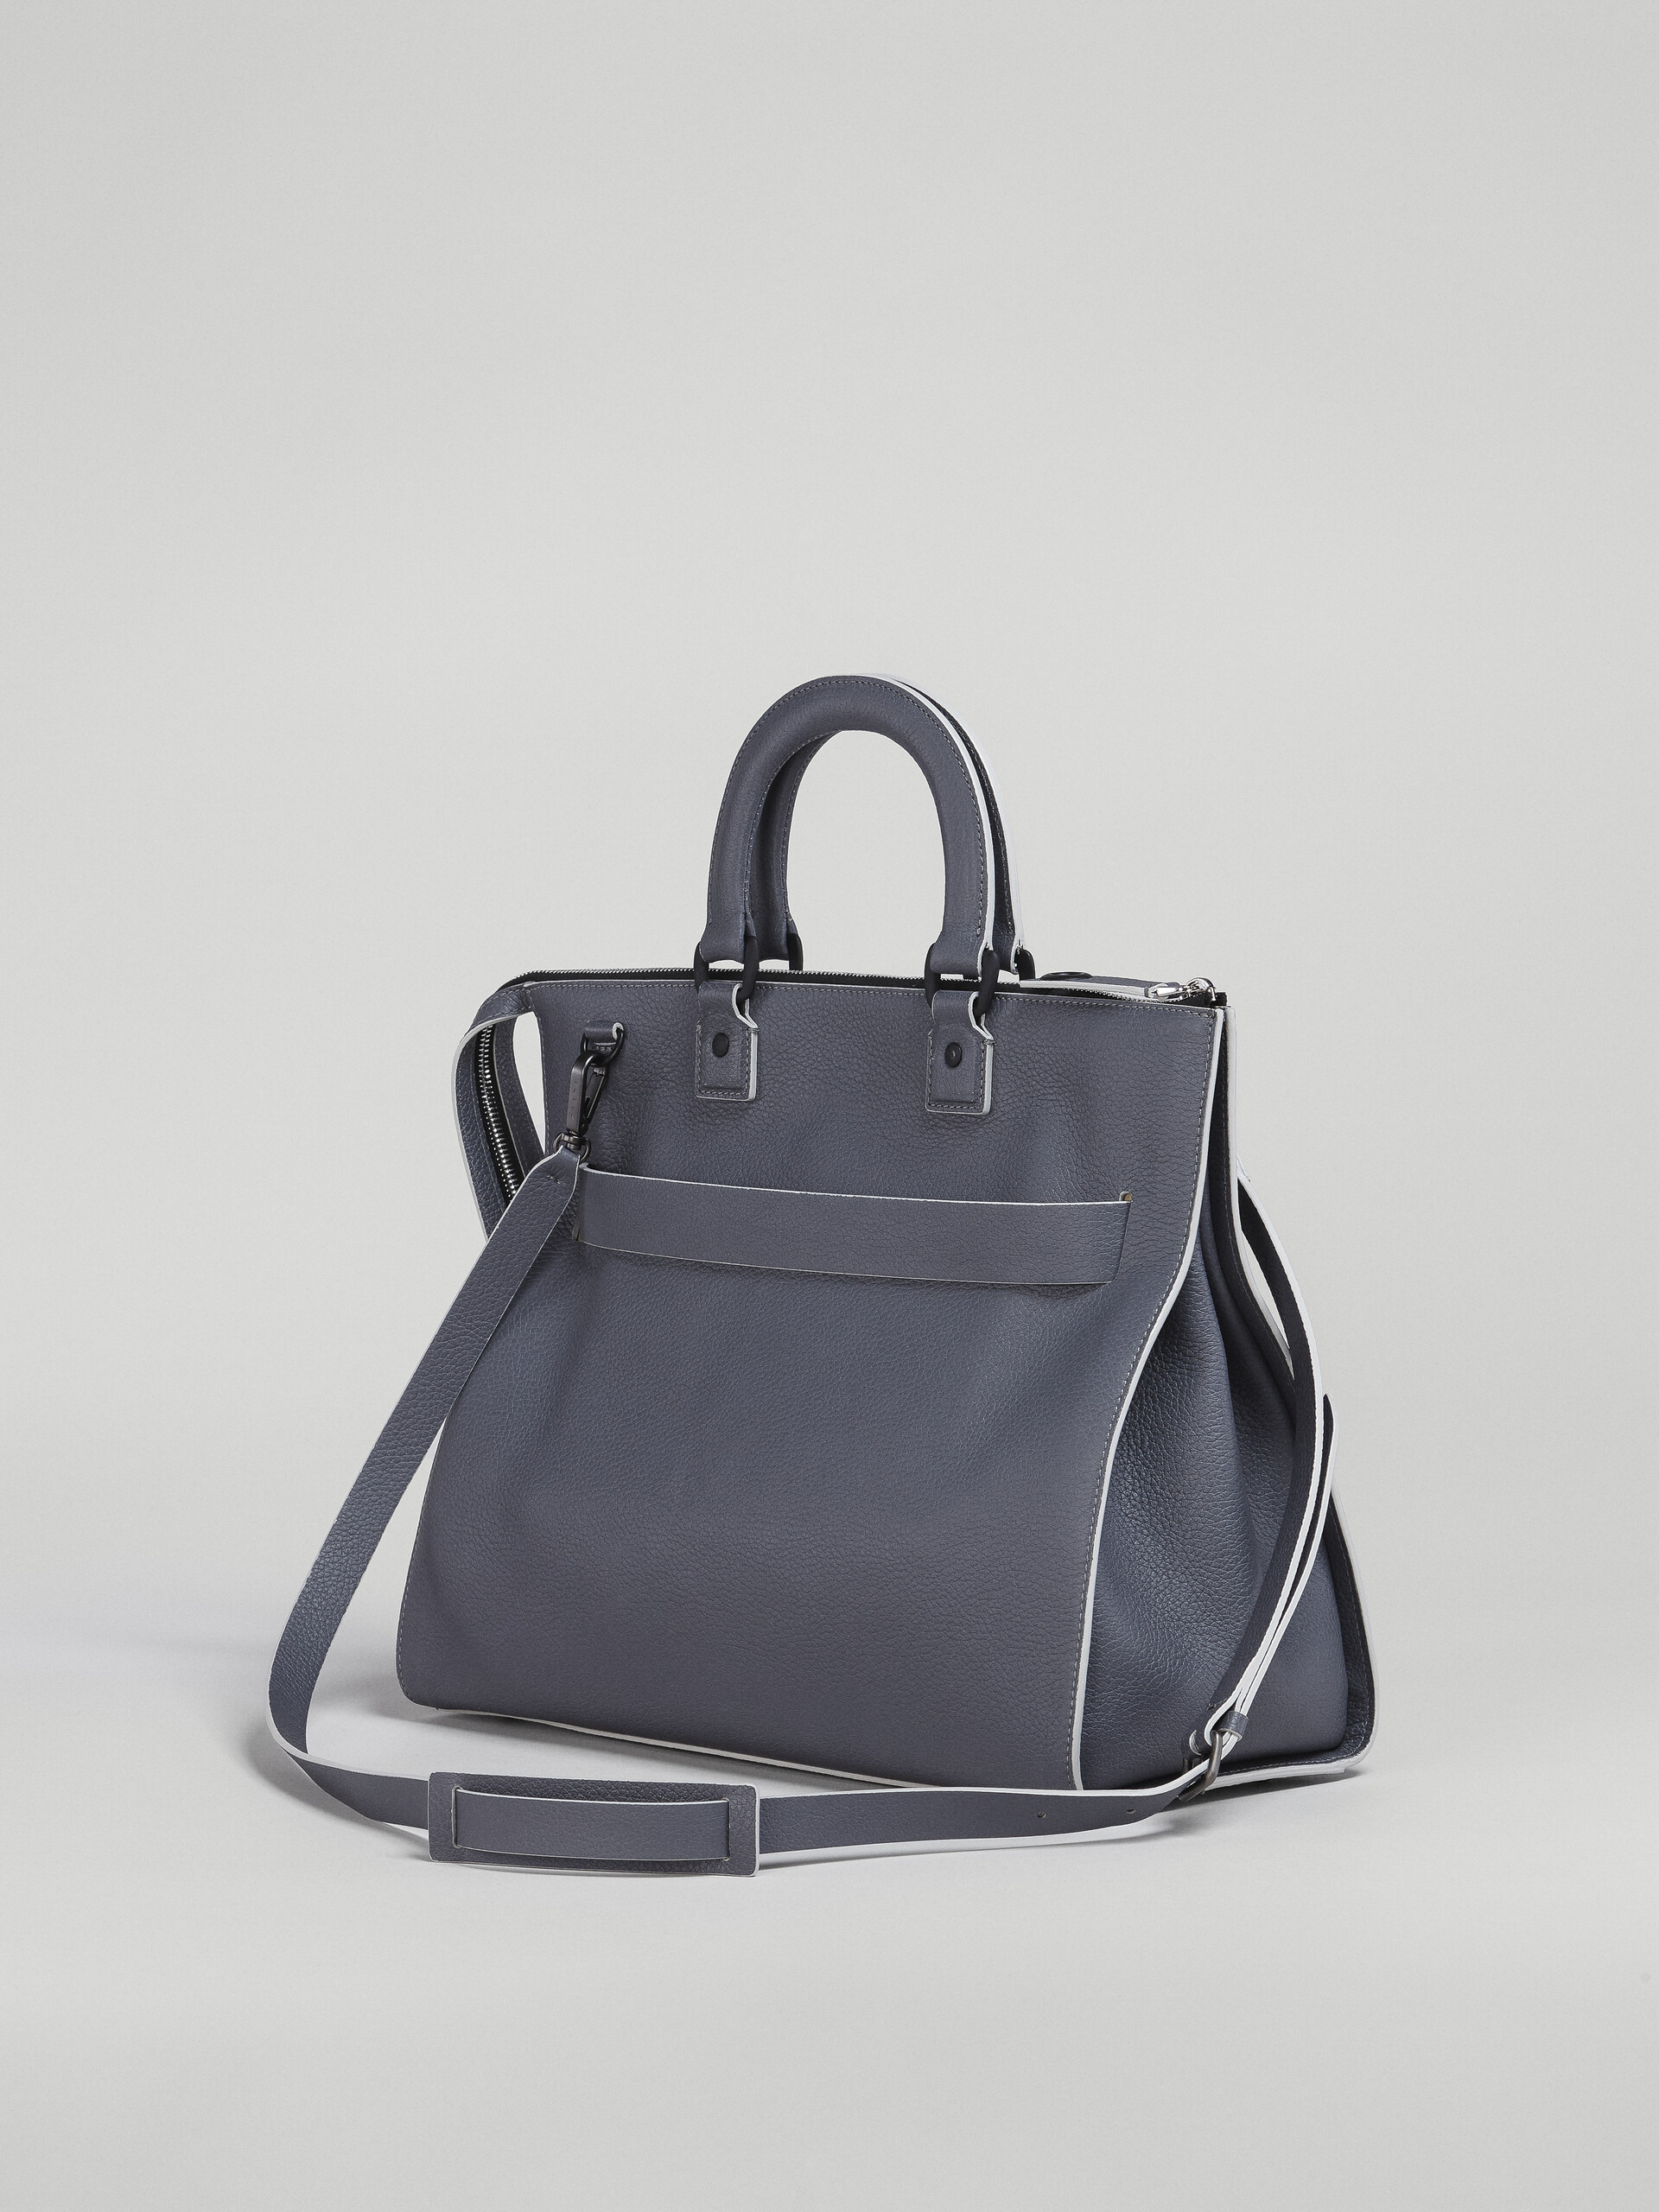 TREASURE bag in grained calf leather - Handbag - Image 3